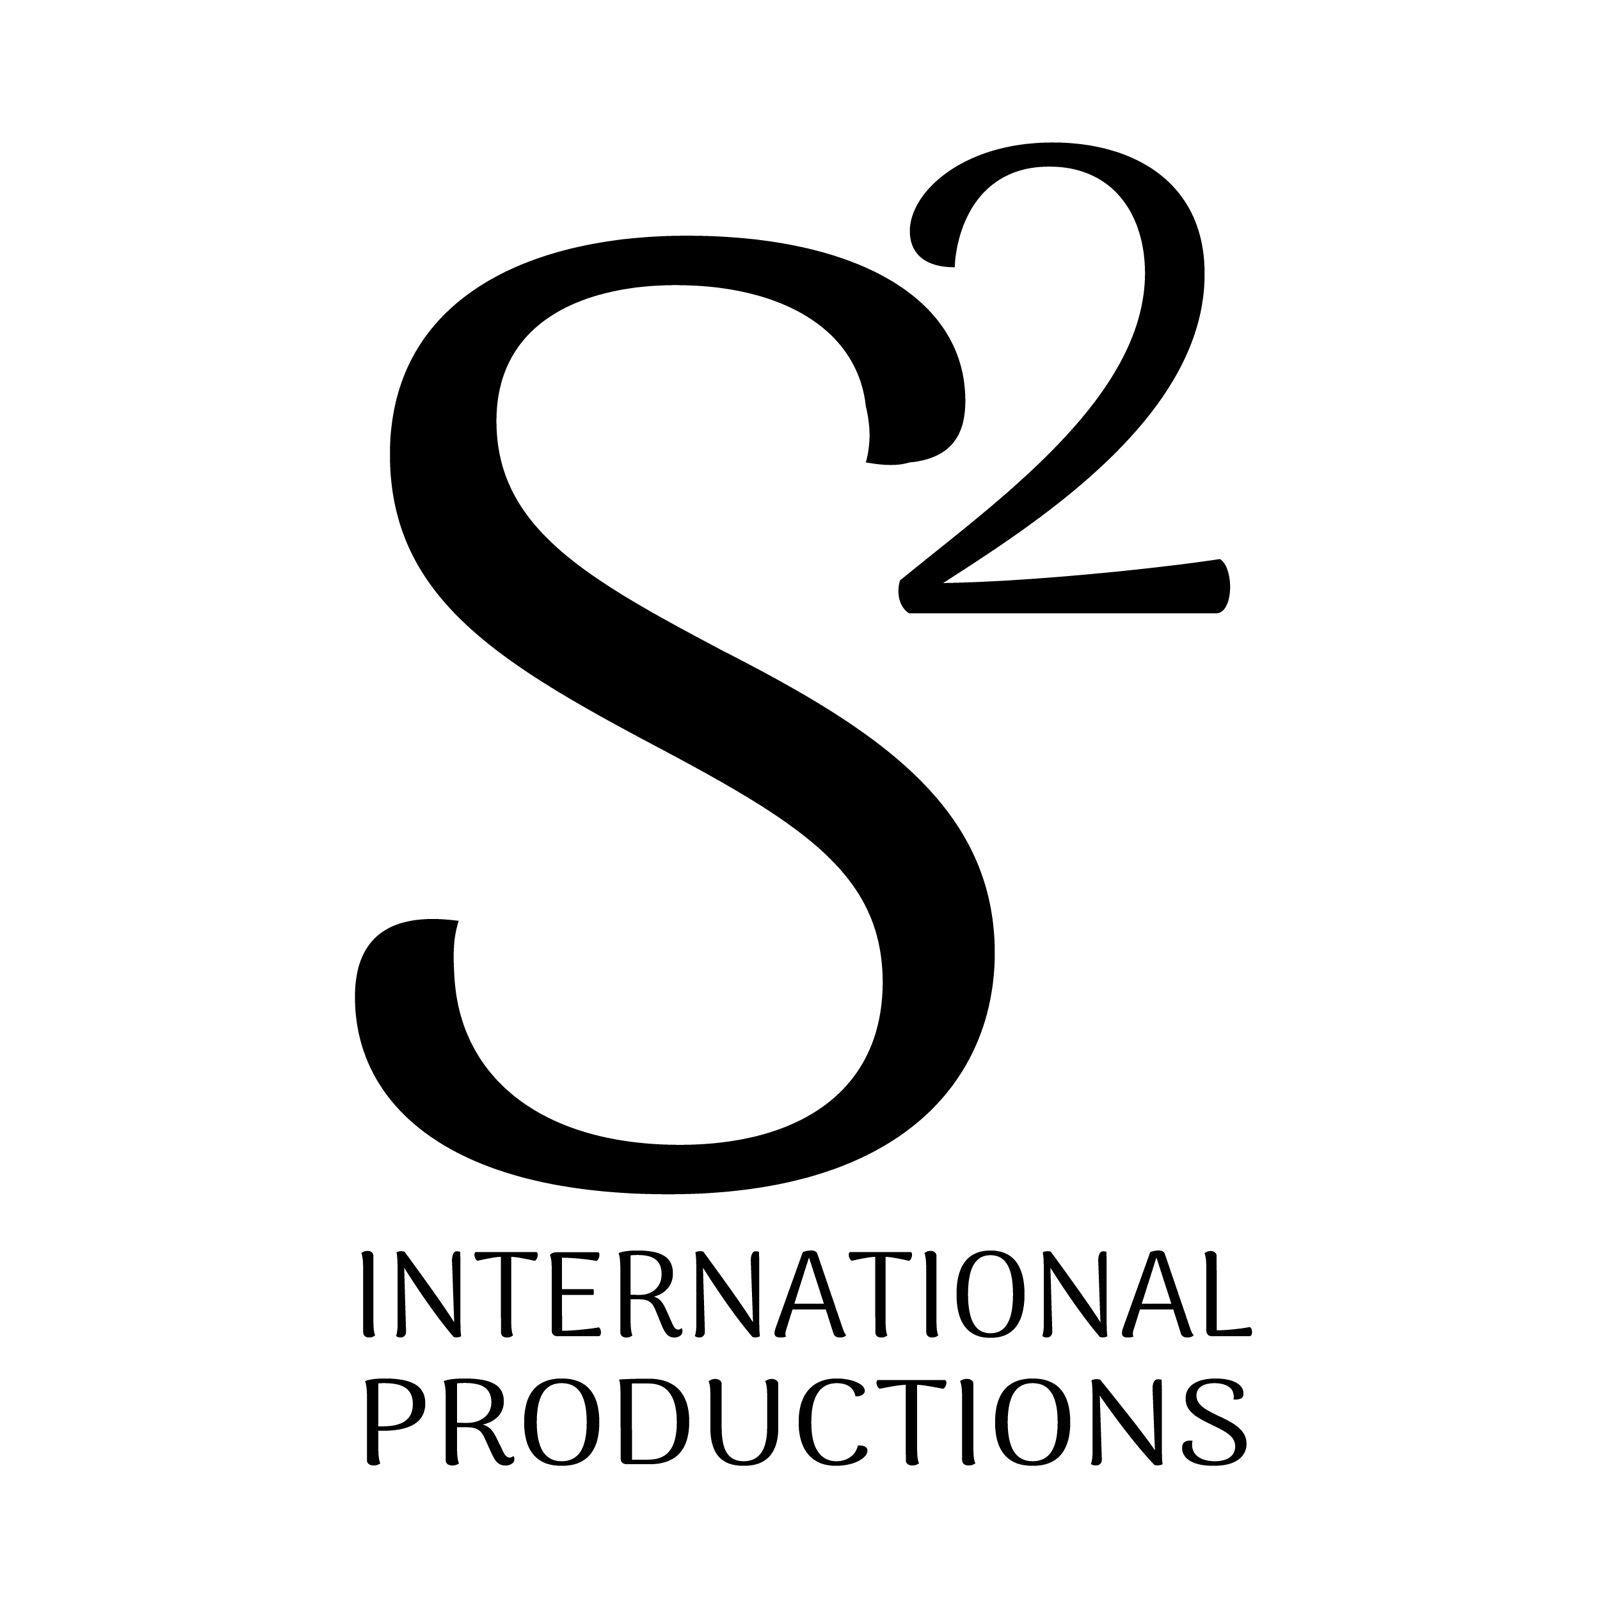 S2 International Productions